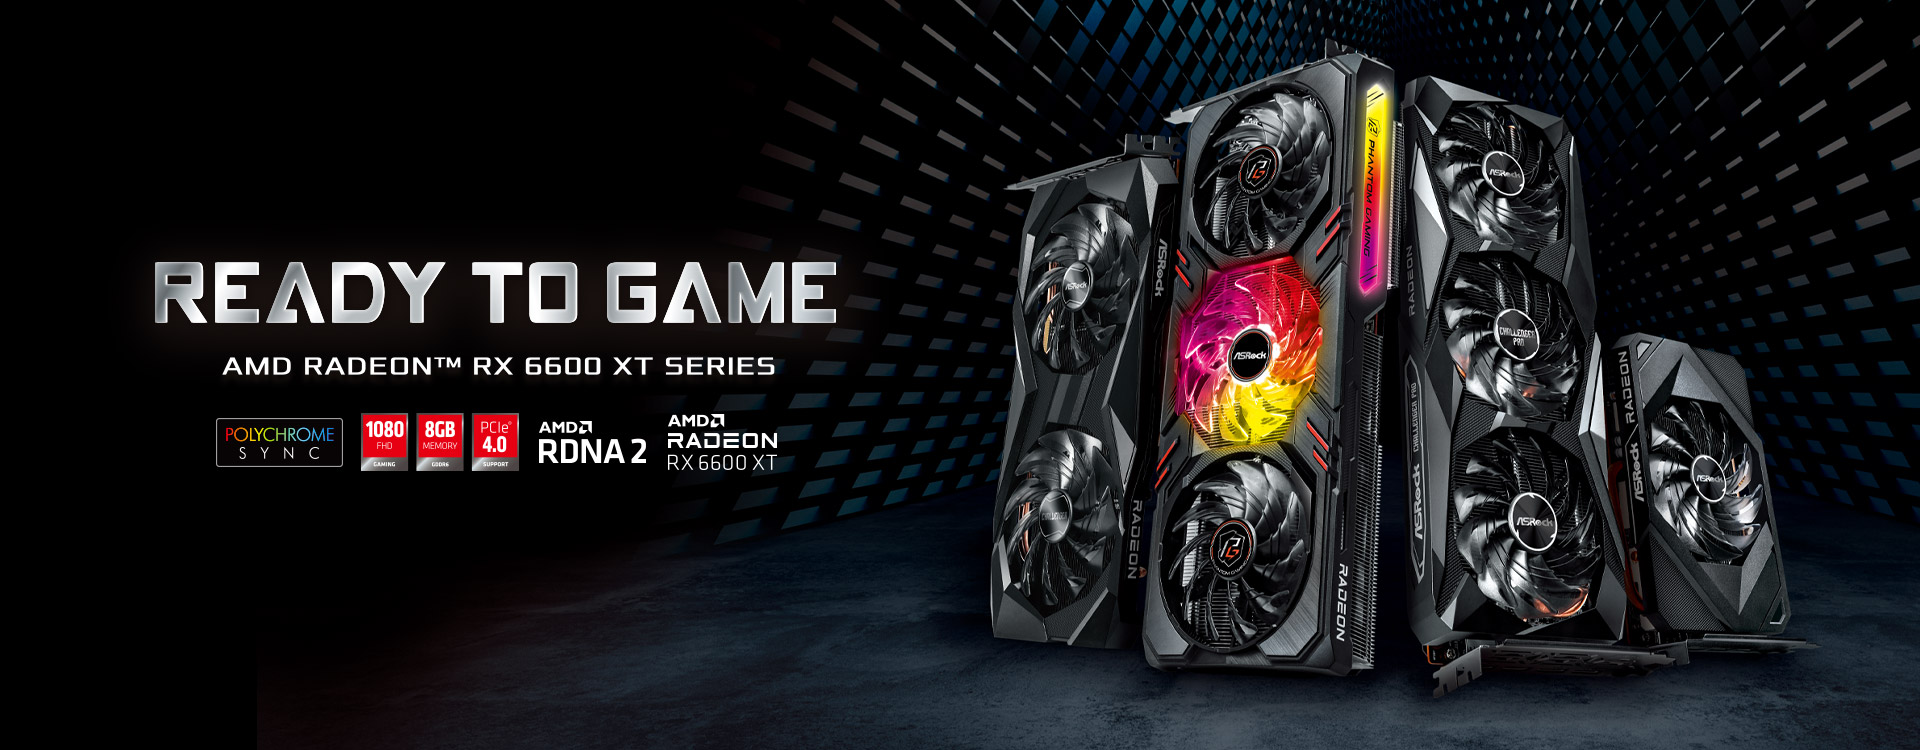 ASRock Announces AMD Radeon™ RX 6600 XT Series Graphics Cards